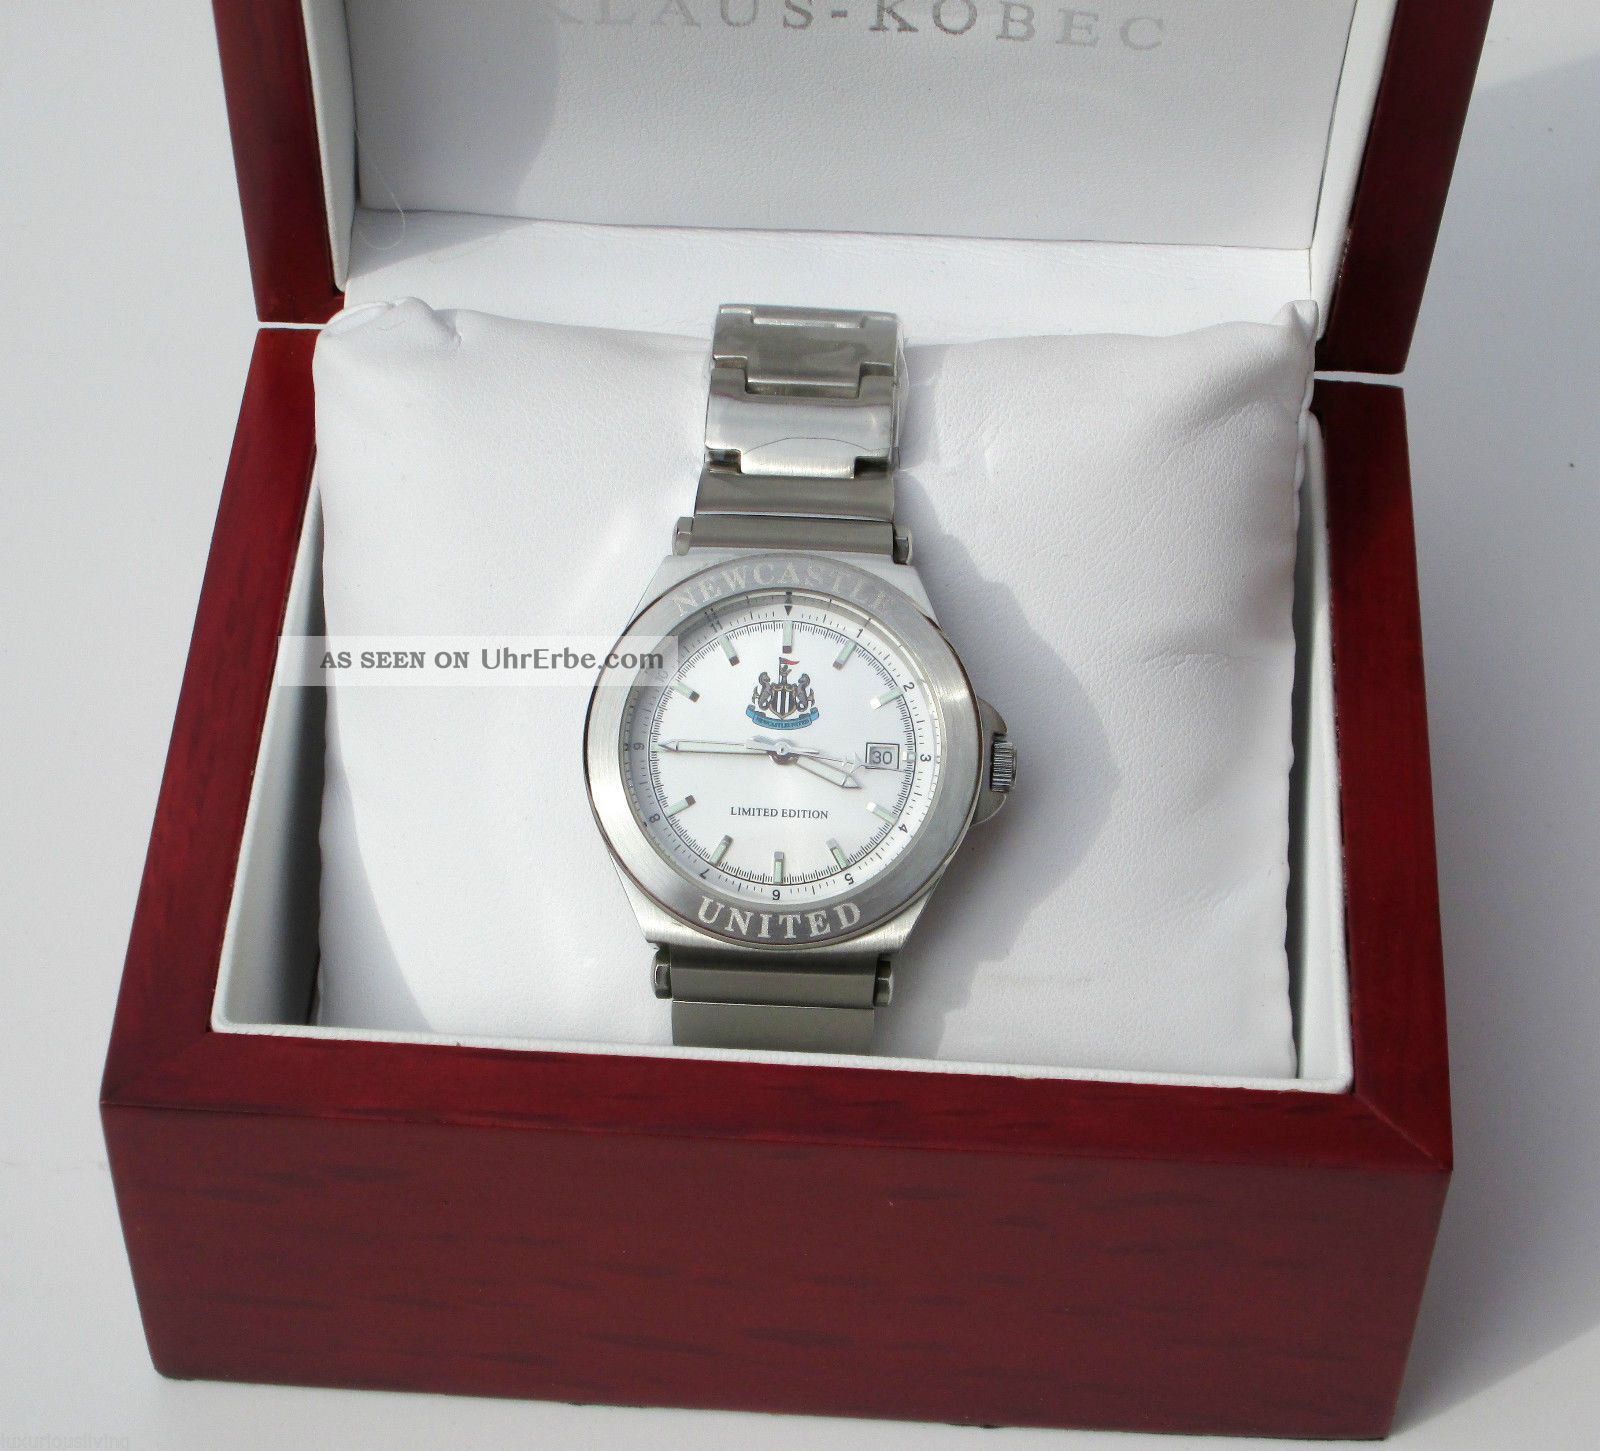 Klaus Kobec Newcastle United Fc Utd Uhr Limited Edition Offizielle Waren Armbanduhren Bild